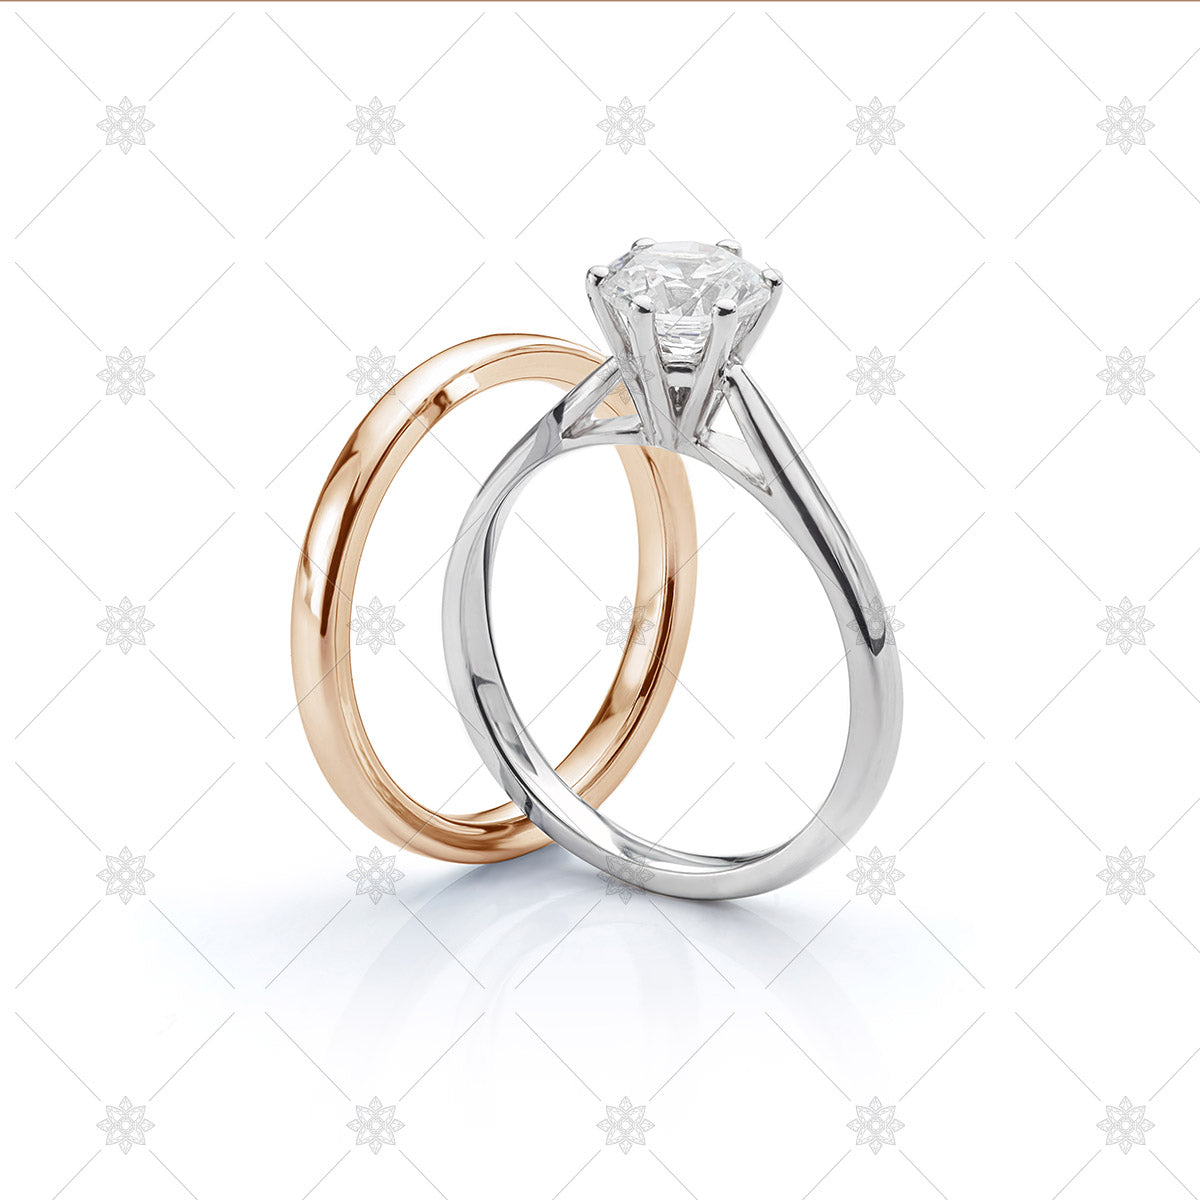 Rose Gold Wedding Ring with White Gold Engagement Ring Set - JG4010